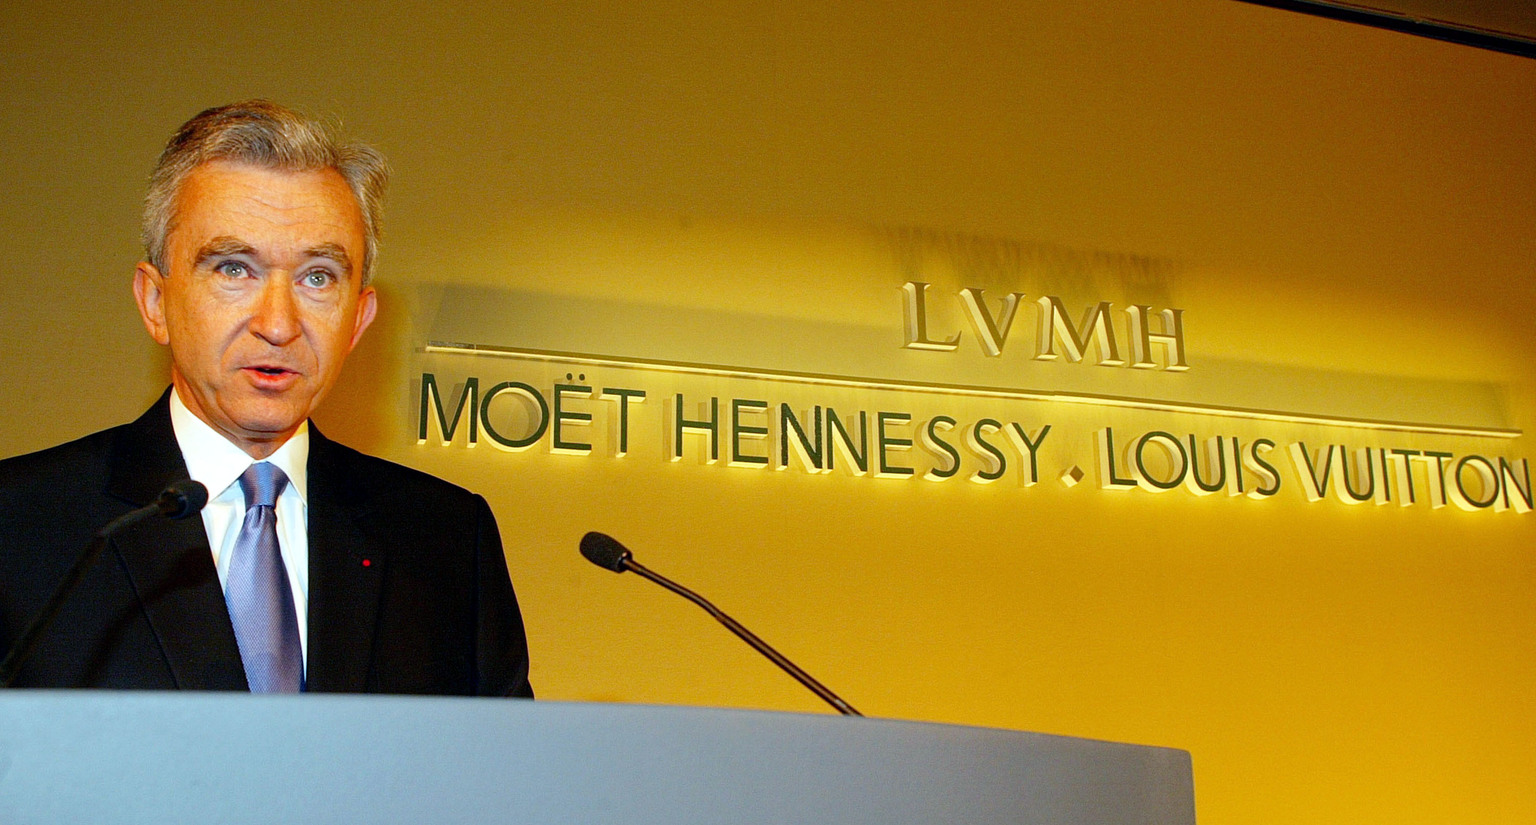 Don't Sell LVMH Moët Hennessy - Louis Vuitton, Société Européenne (EPA:MC)  Before You Read This